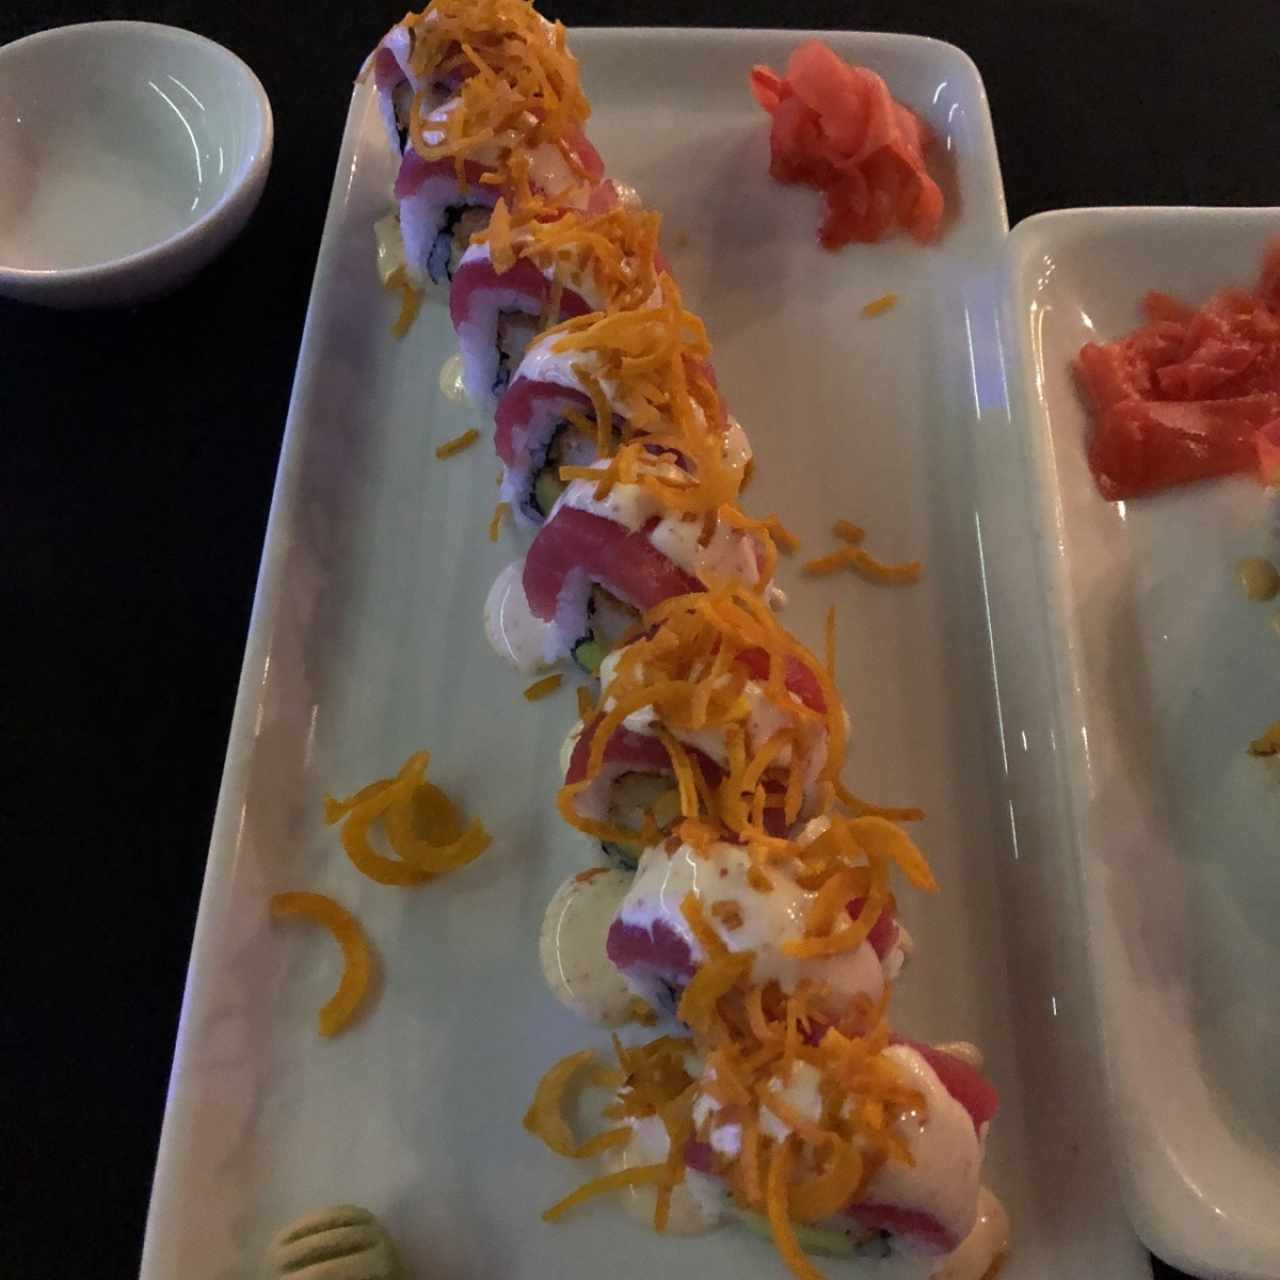 Sushi rolls/Makis - Lima maki